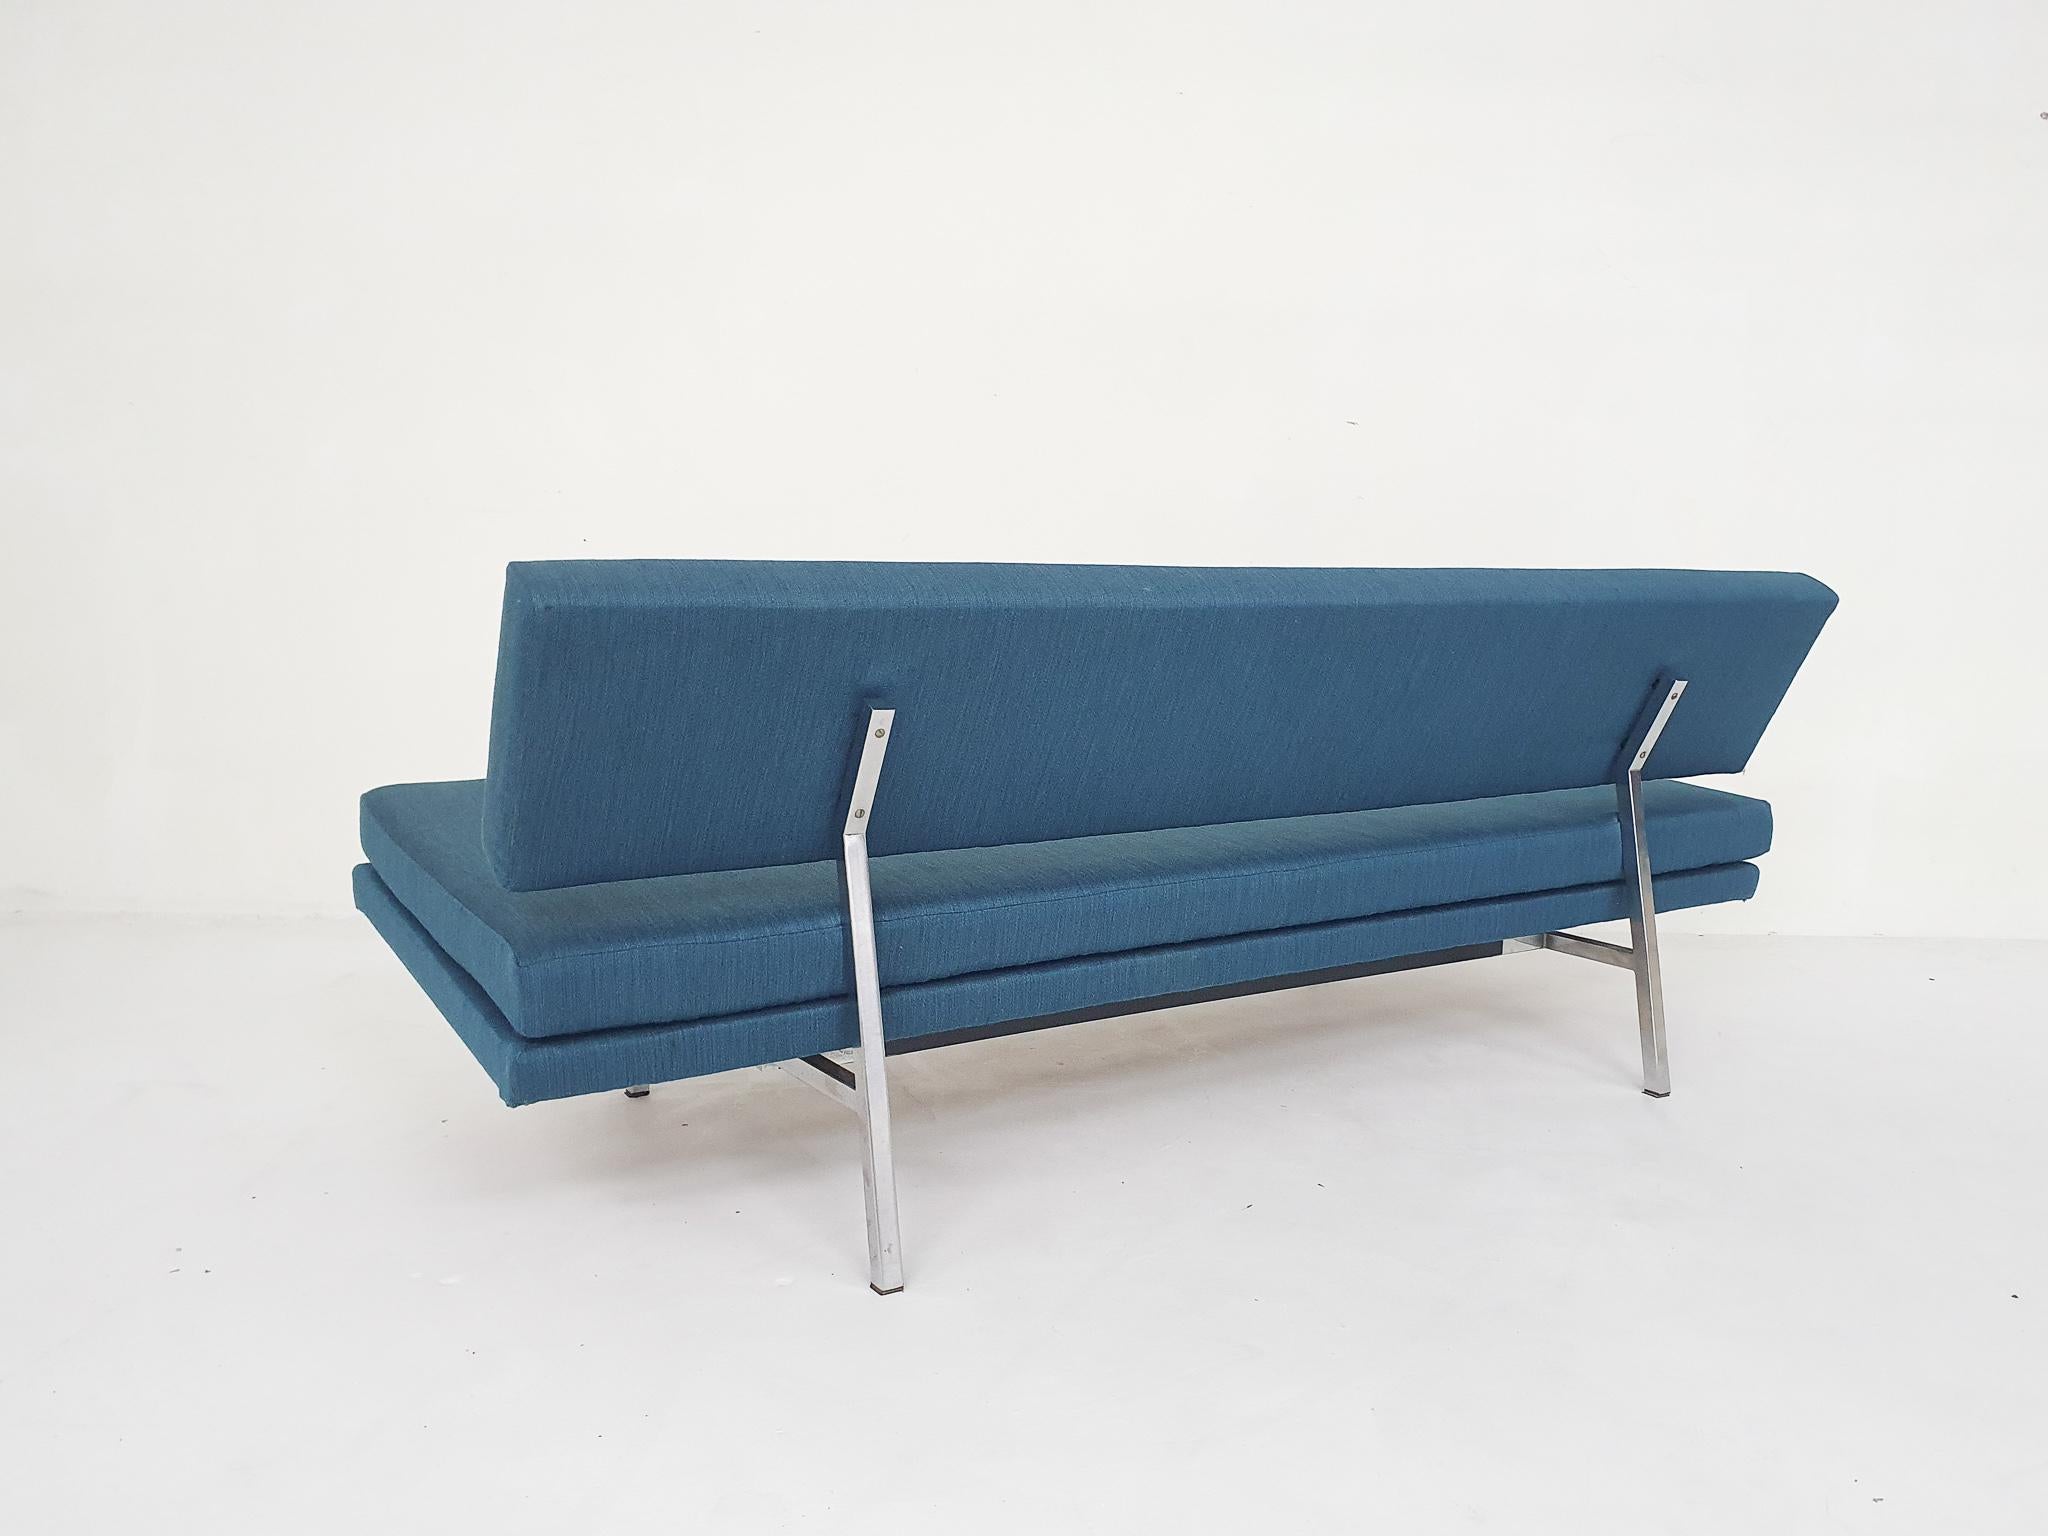 Metal BR 02 sleeper sofa by Martin Visser for ’t Spectrum, The Netherlands, 1958